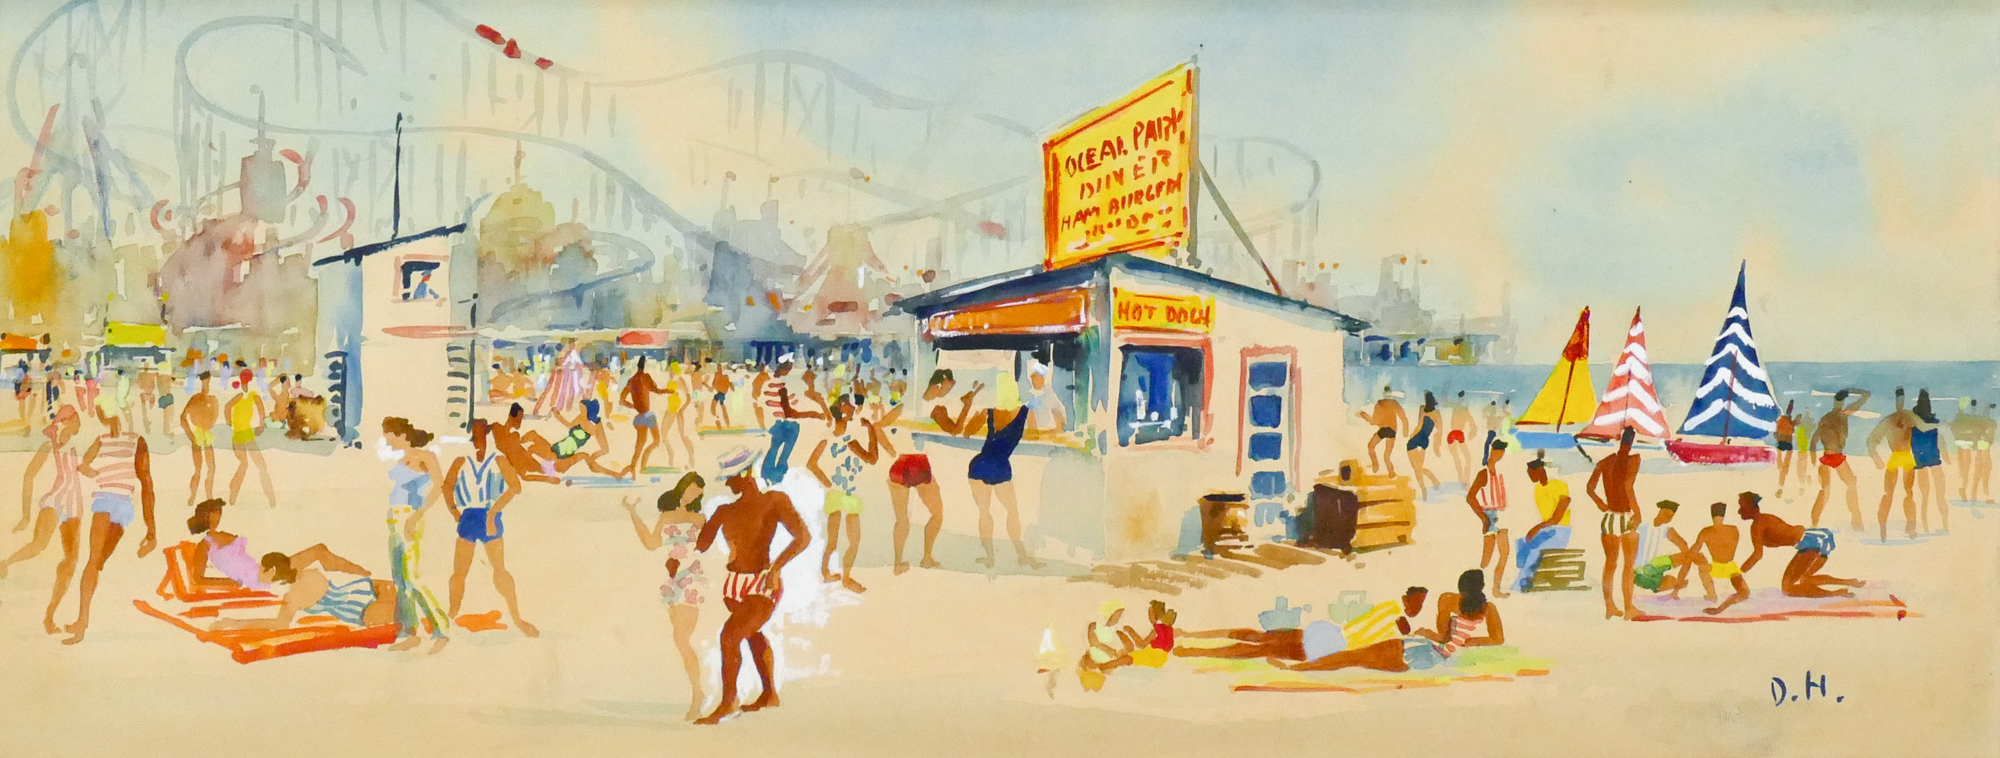 Ocean Park Diner Watercolor Painting 366de9